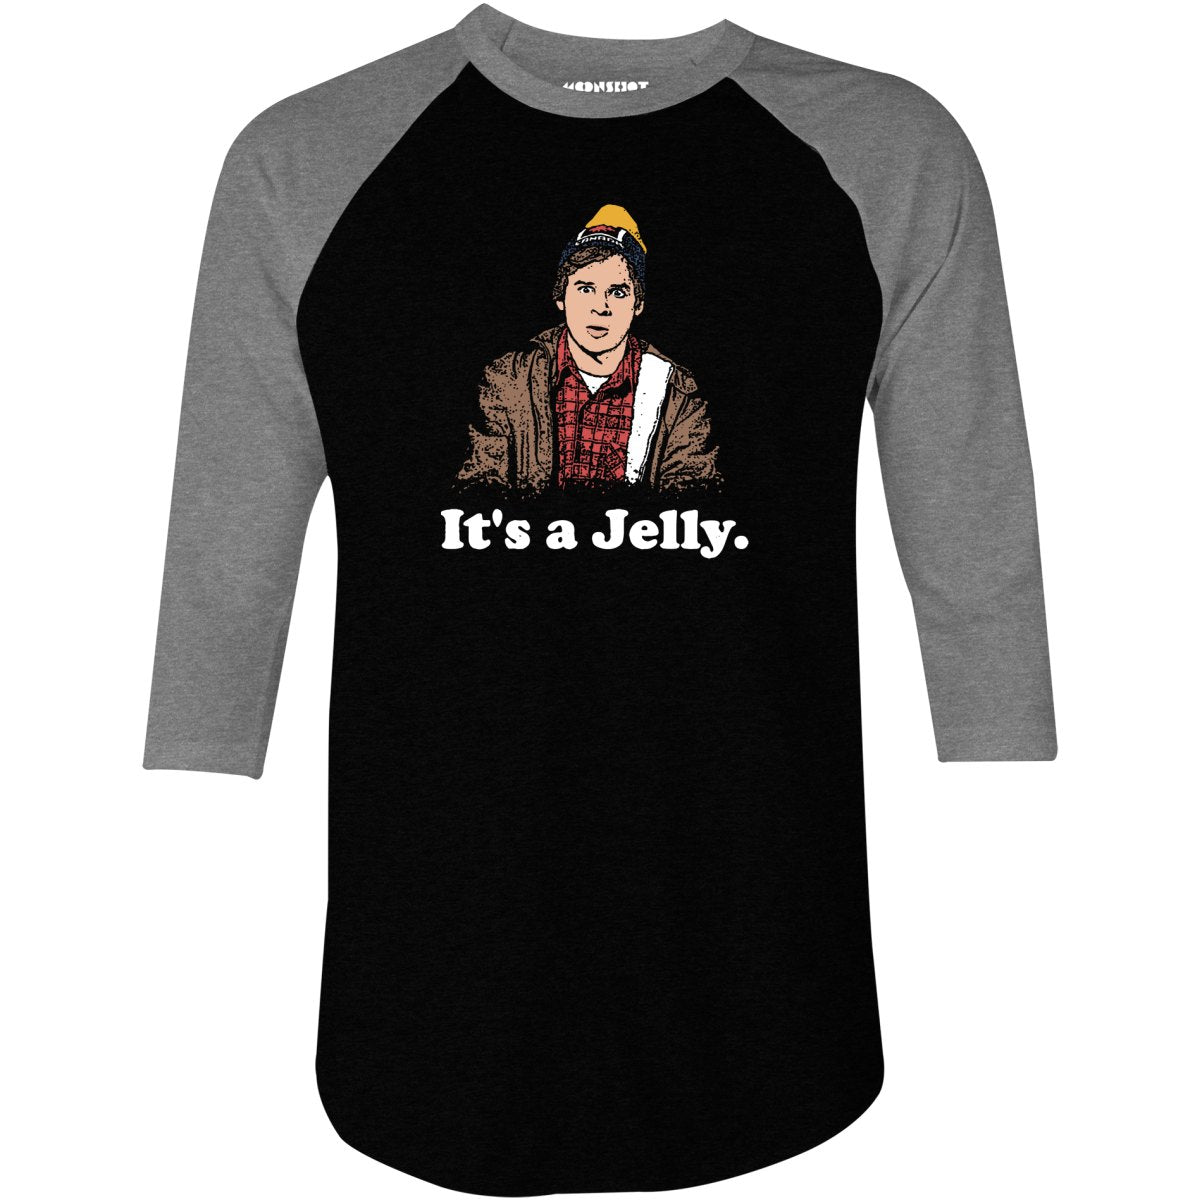 It's a Jelly - 3/4 Sleeve Raglan T-Shirt